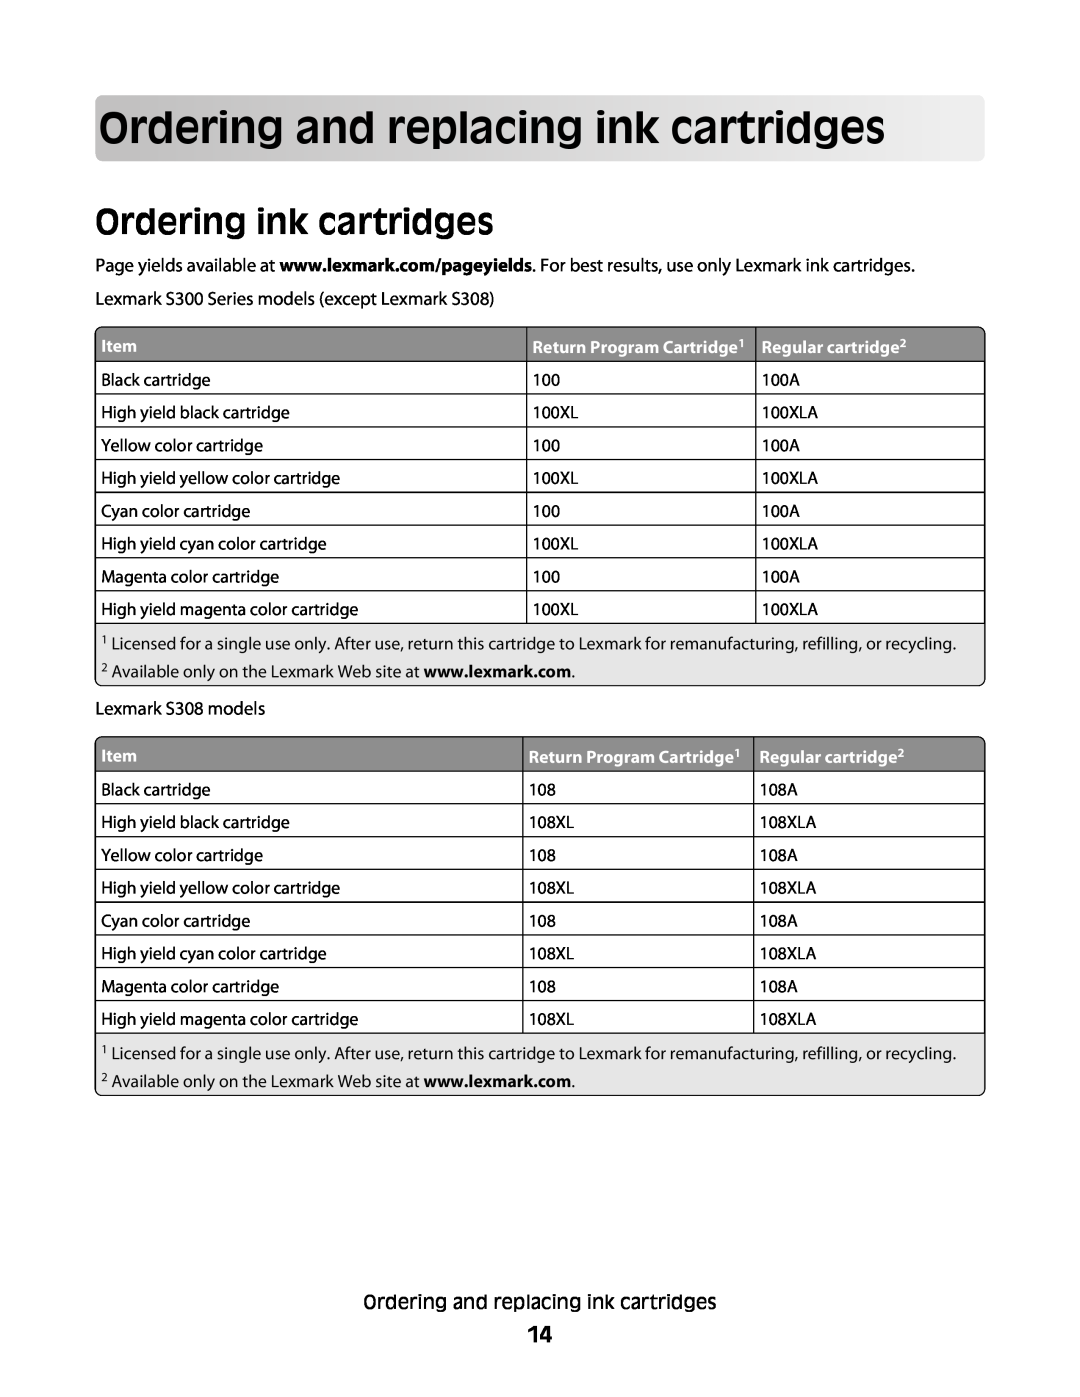 Lexmark S300 Orderingandreplacingink cartridges, Ordering ink cartridges, Return Program Cartridge1, Regular cartridge2 